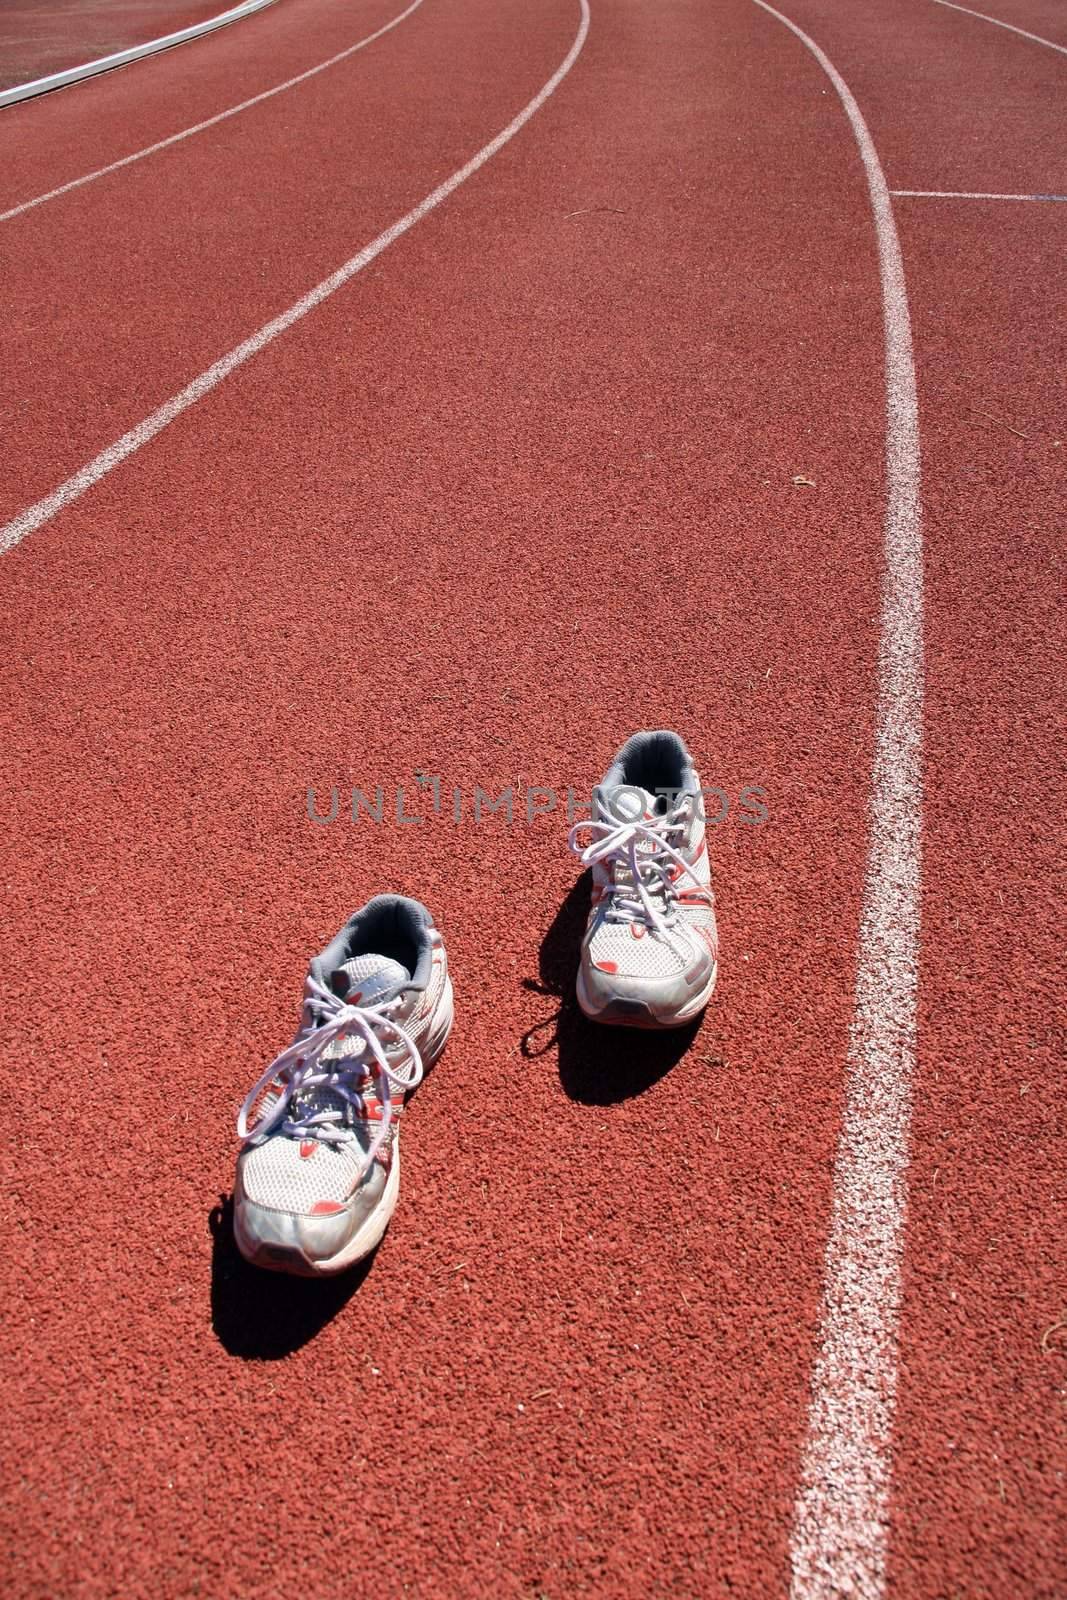 athletics shoes